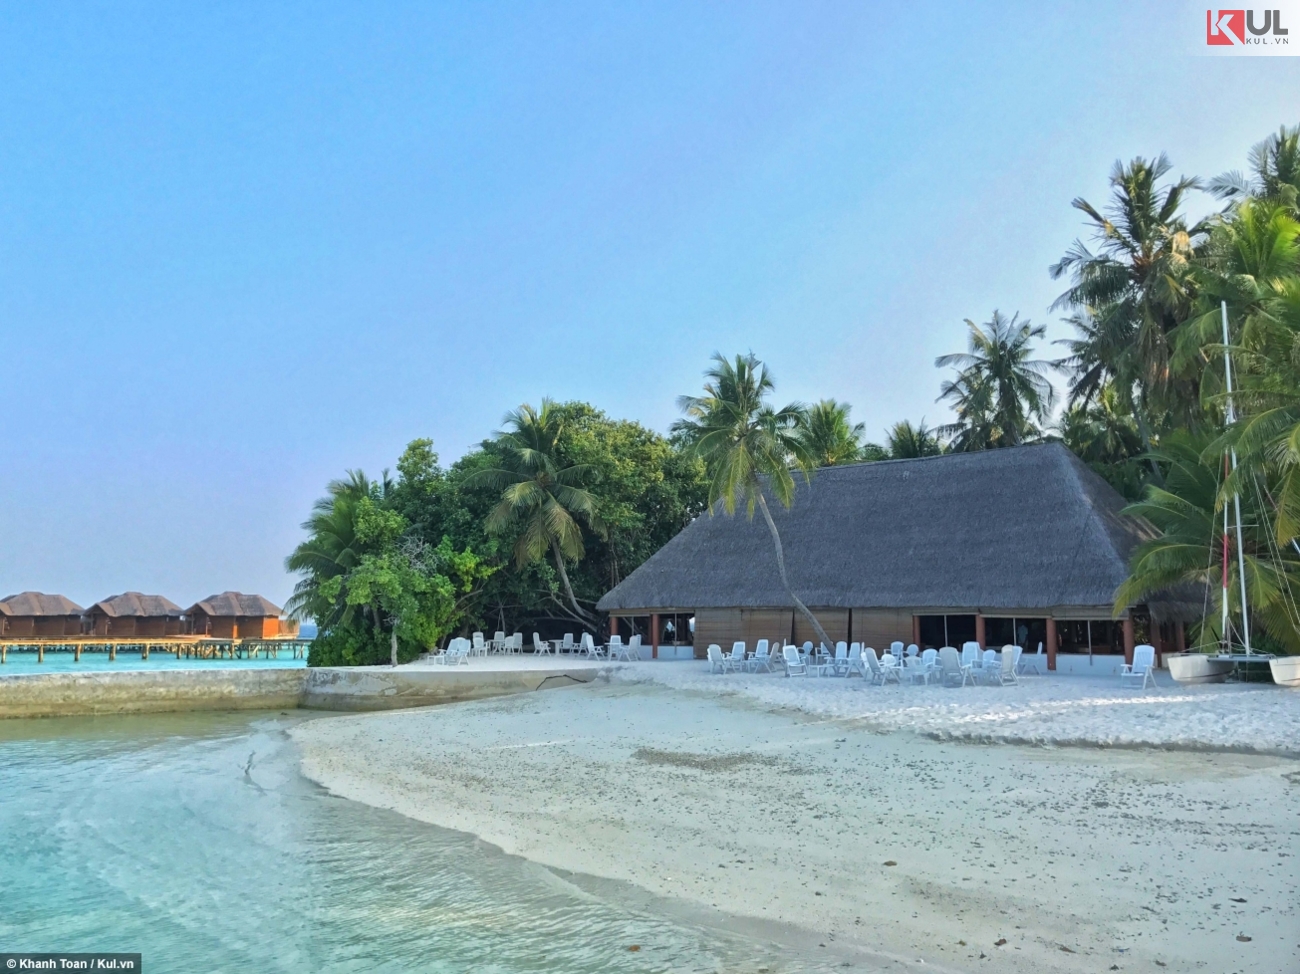 album_watermark_kinh-nghiem-di-du-lich-maldives-9TWE4TWE